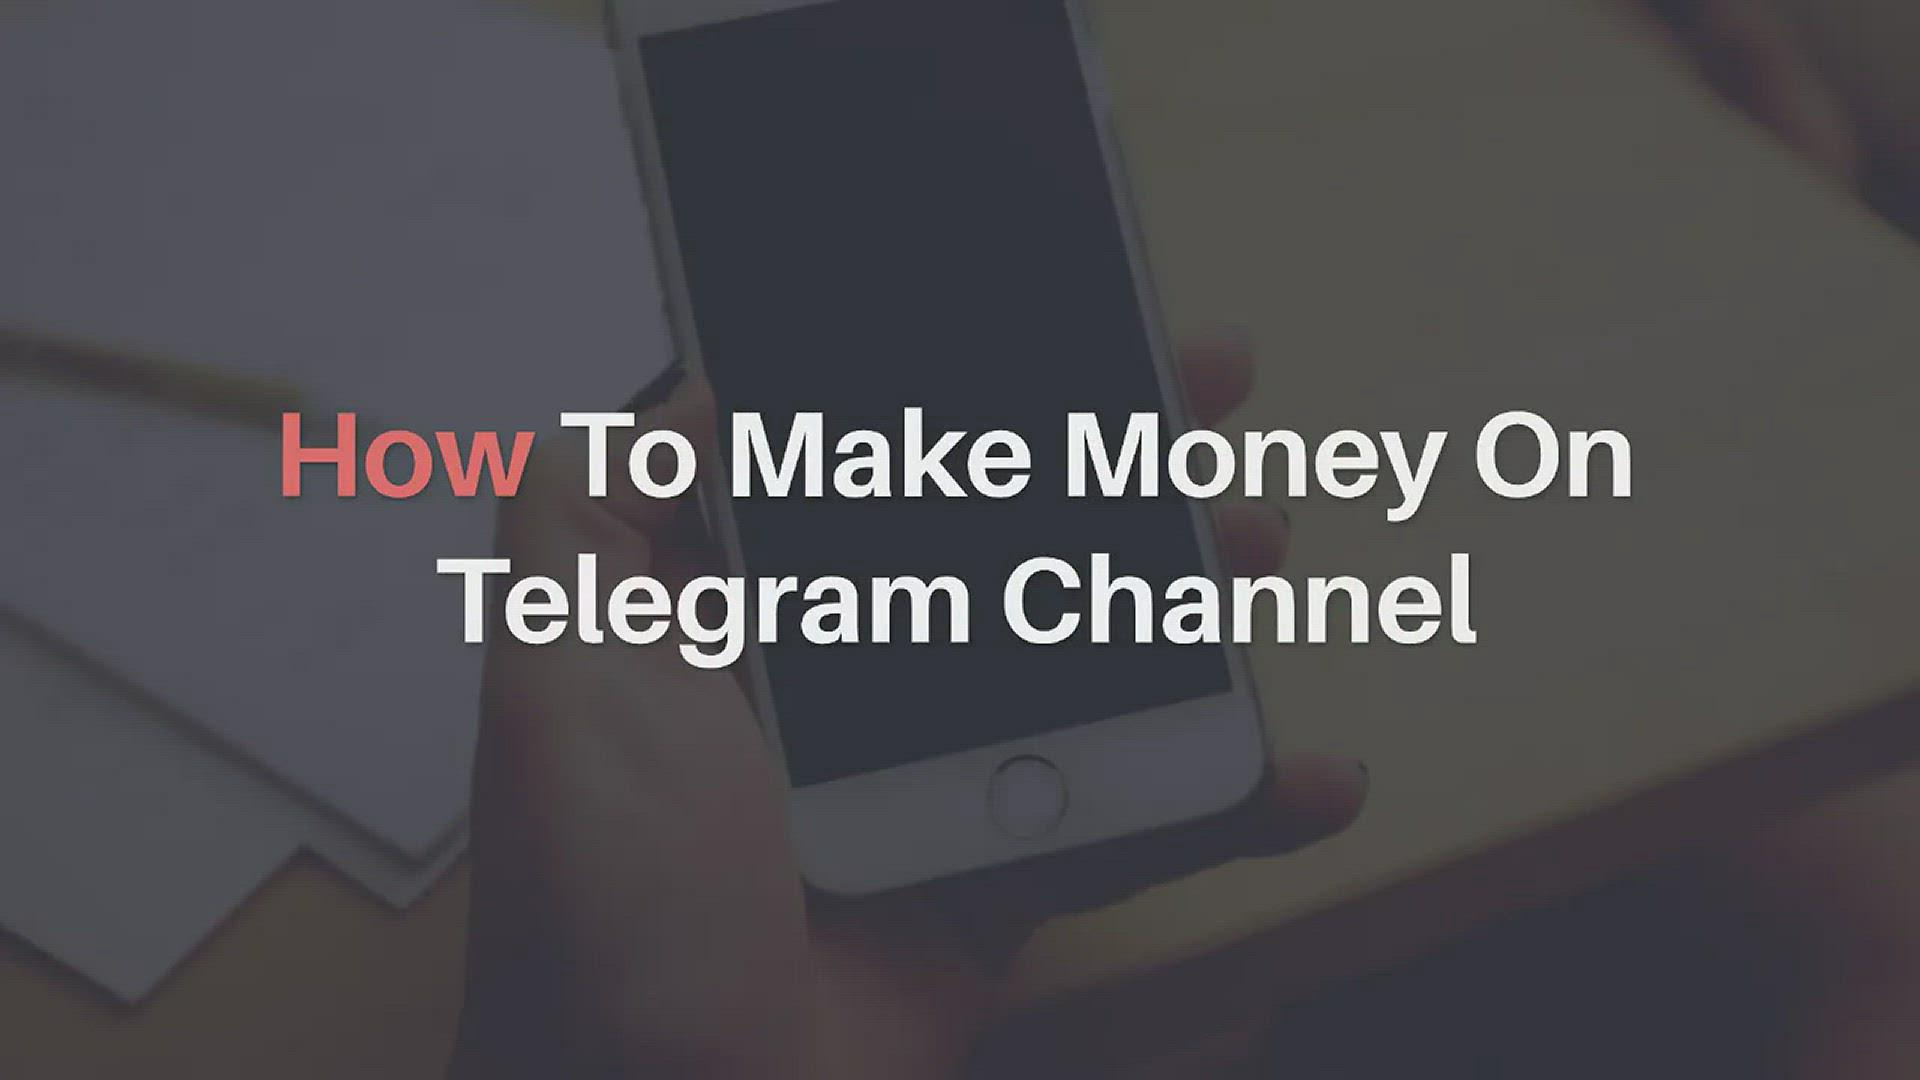 'Video thumbnail for How To Make Money On Telegram Channel'